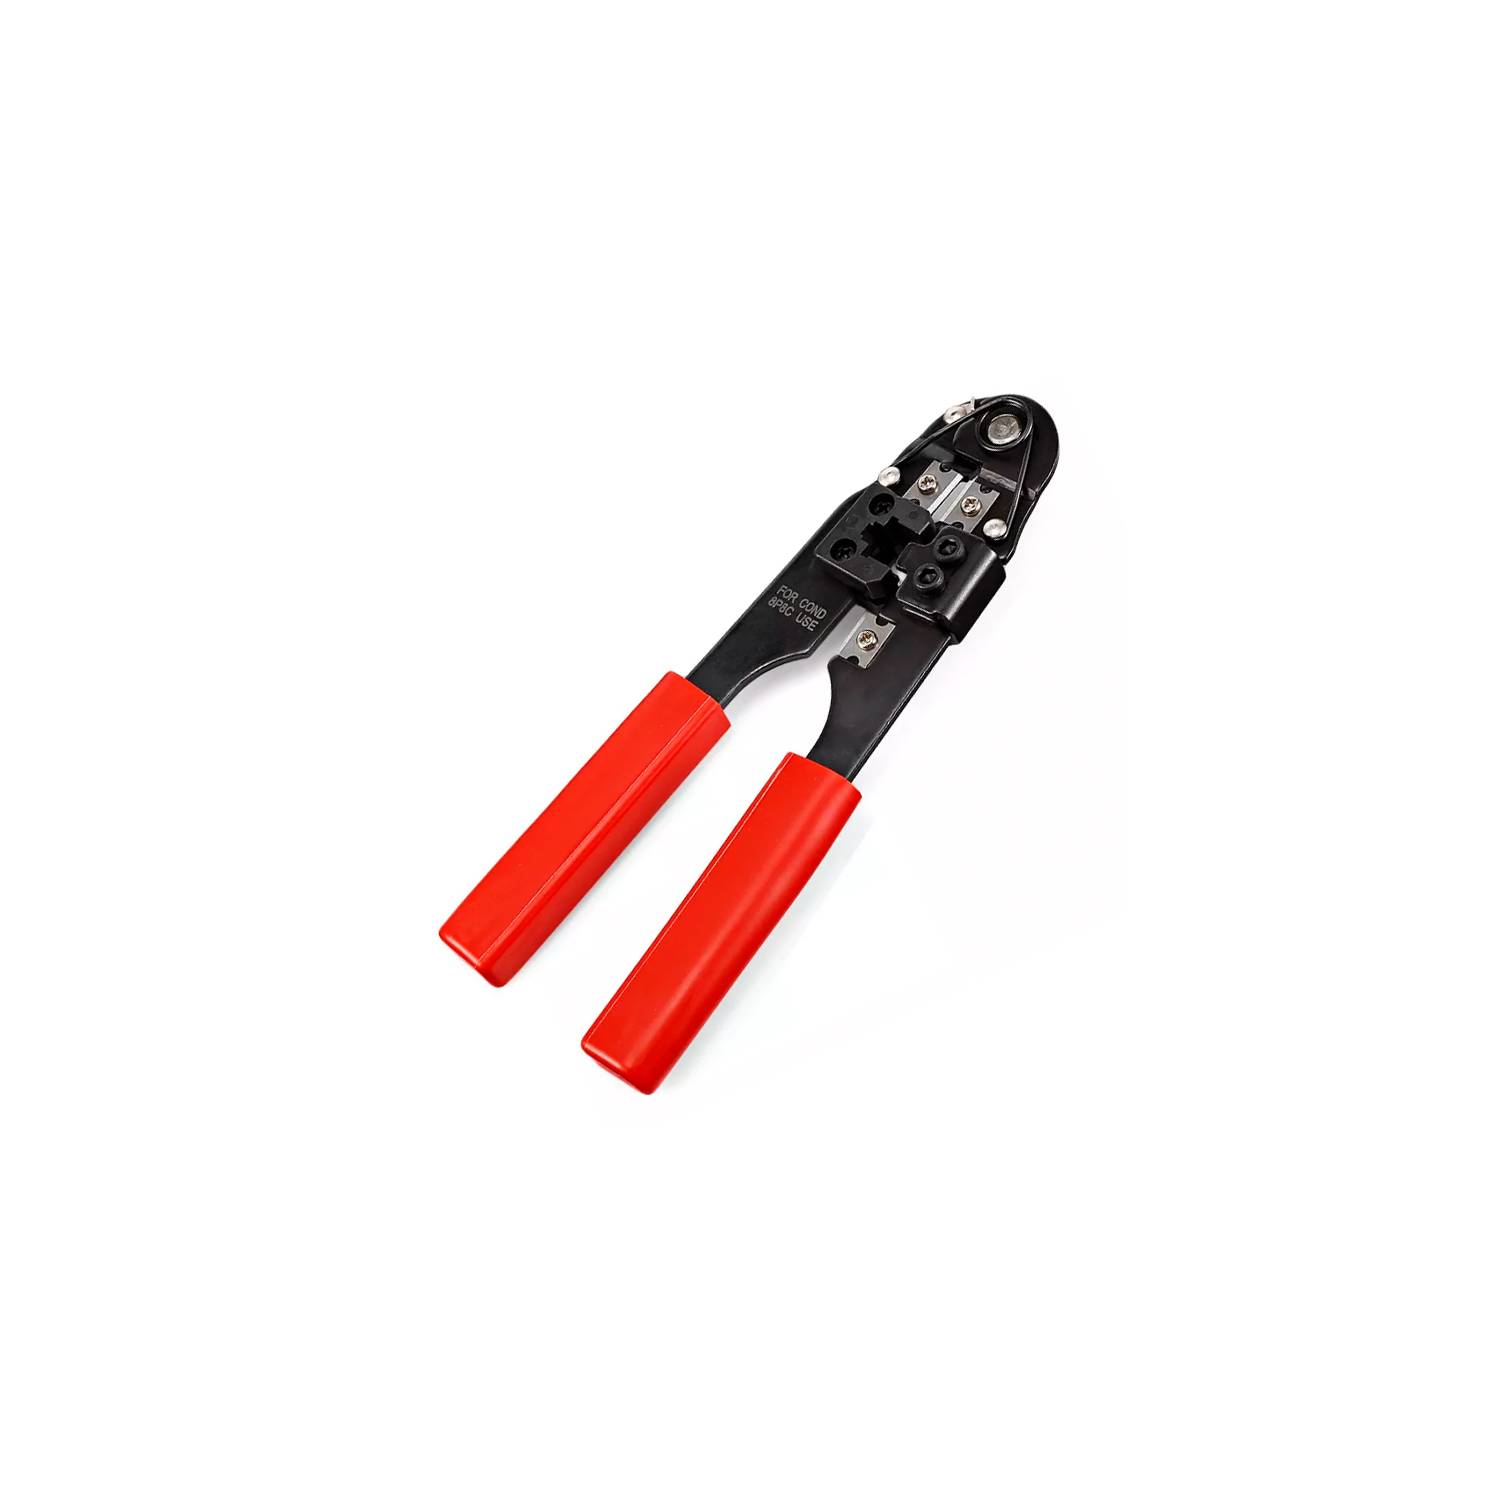 DM Crimpeadora Crimpadora Cable de red RJ45 HT-210C